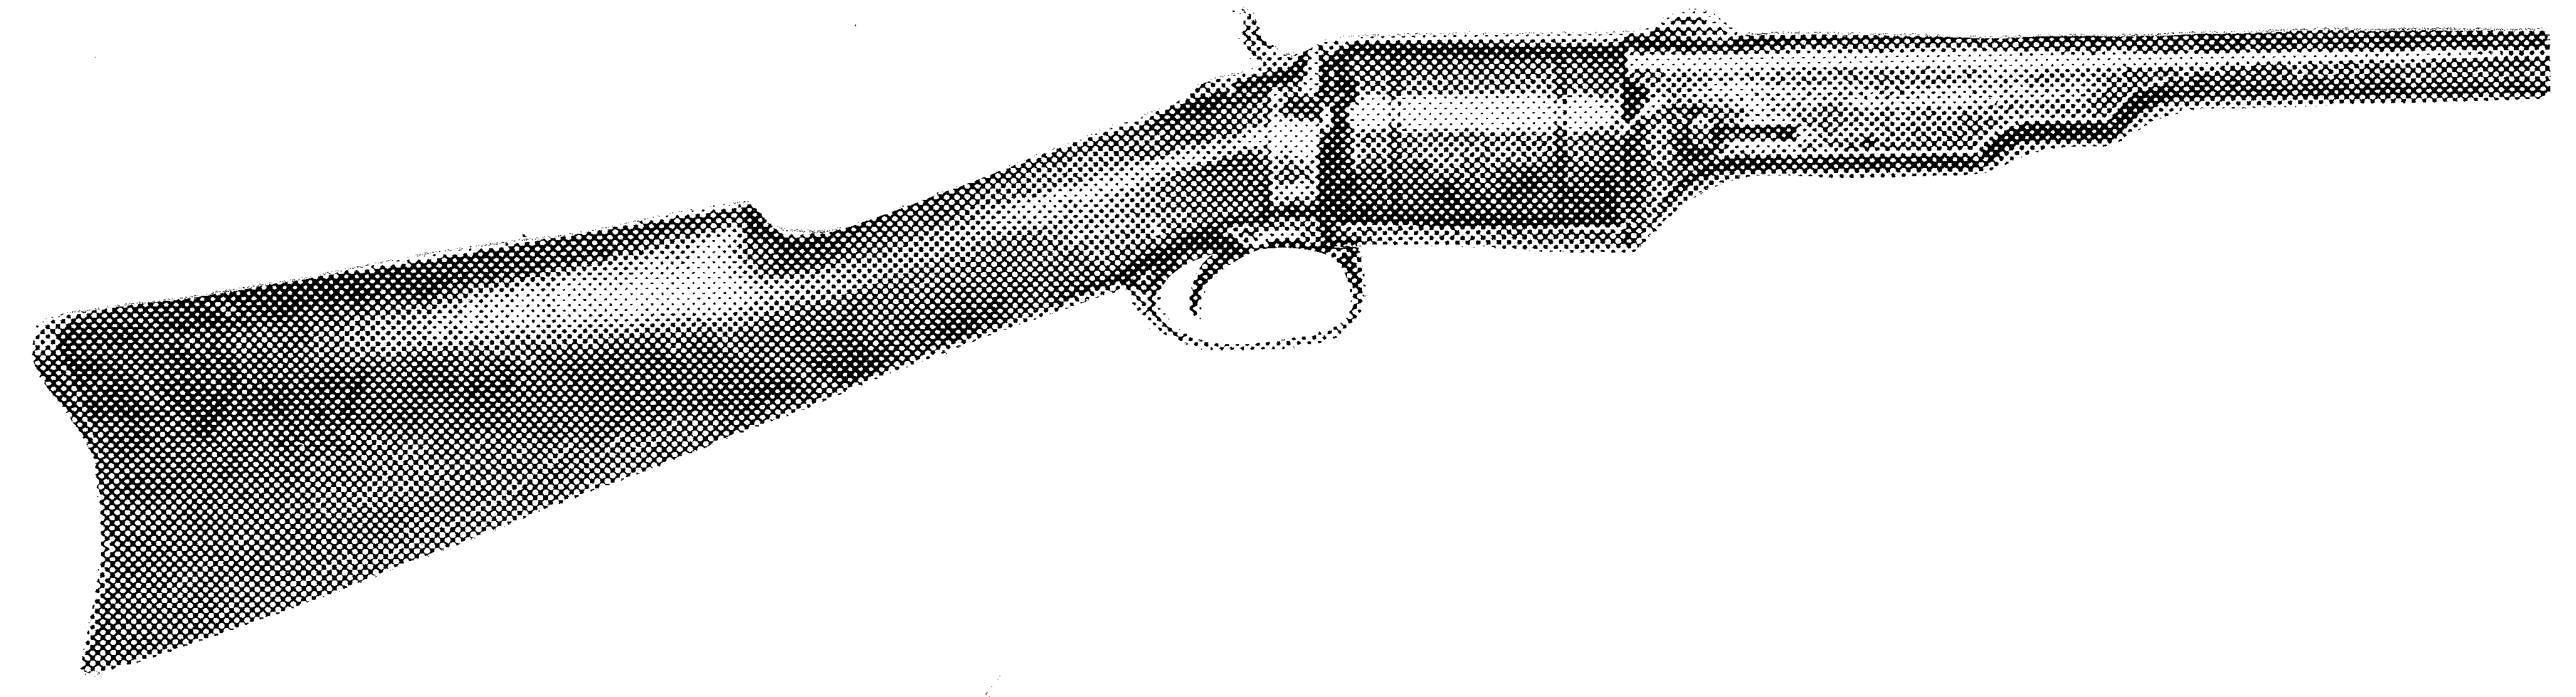 Model 1839 Shotgun